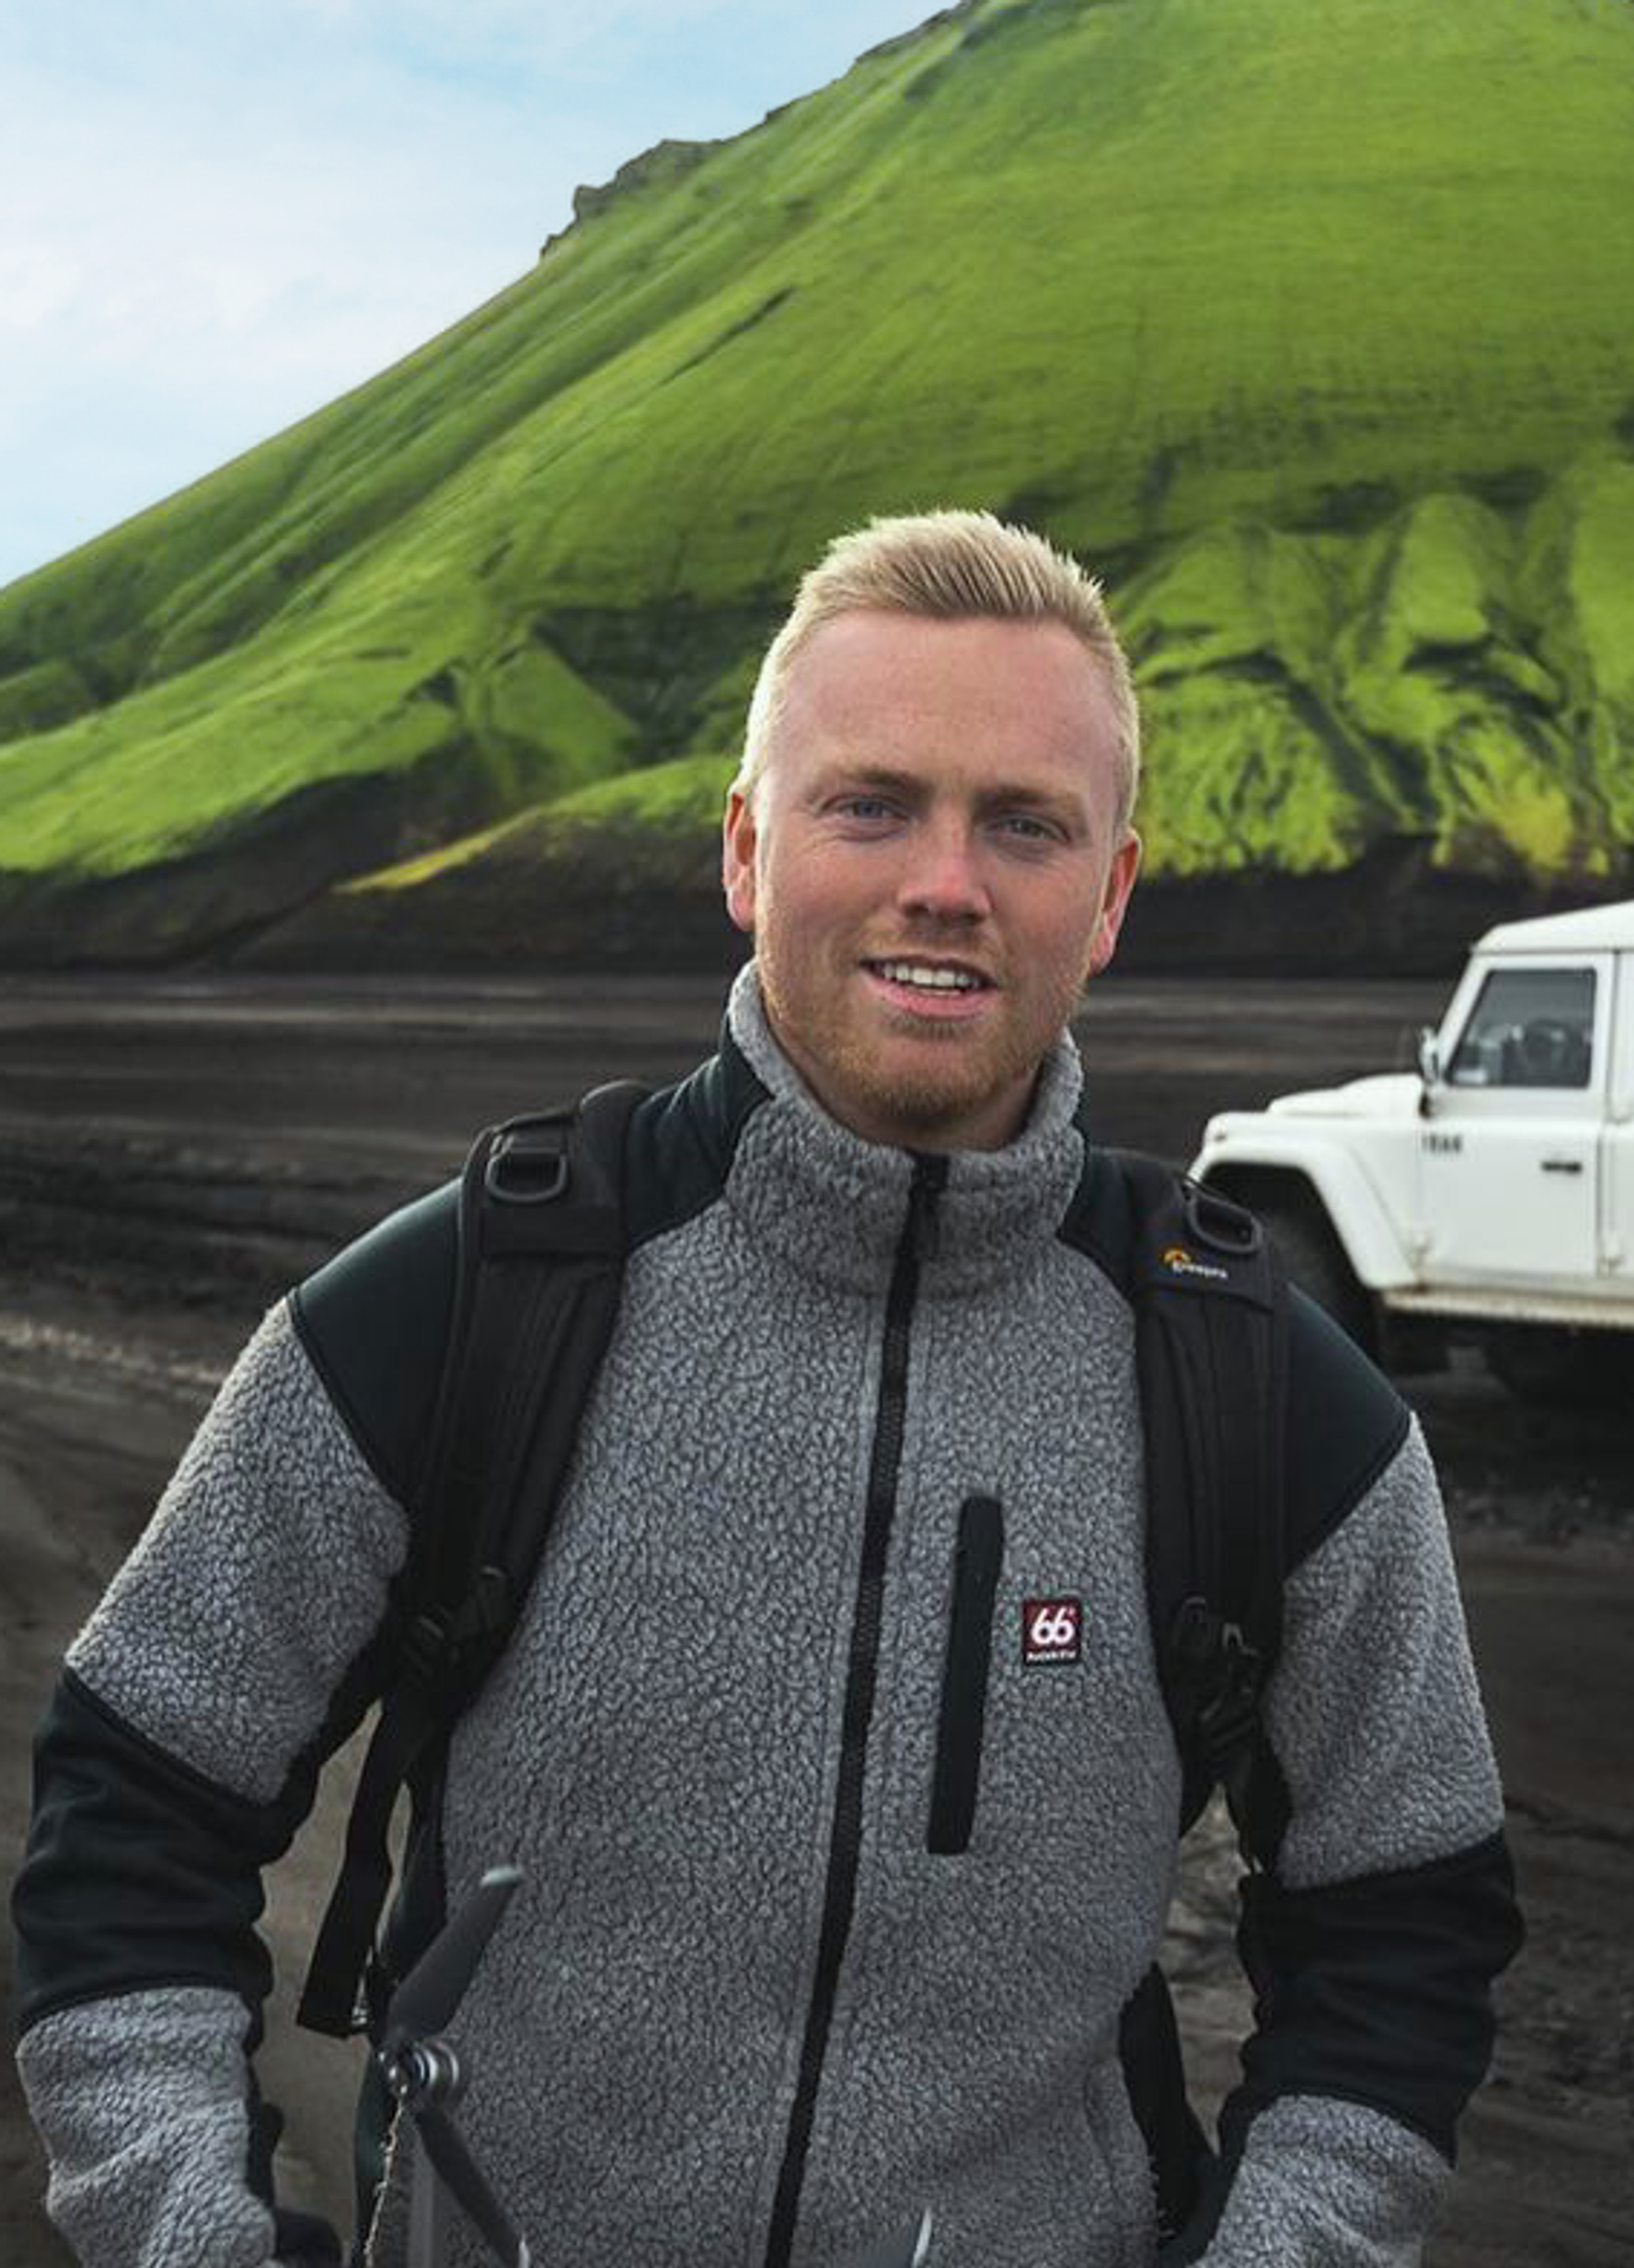 Garðar Ólafsson smiling while walking on a black sand beach near gravel roads with a rental car behind him